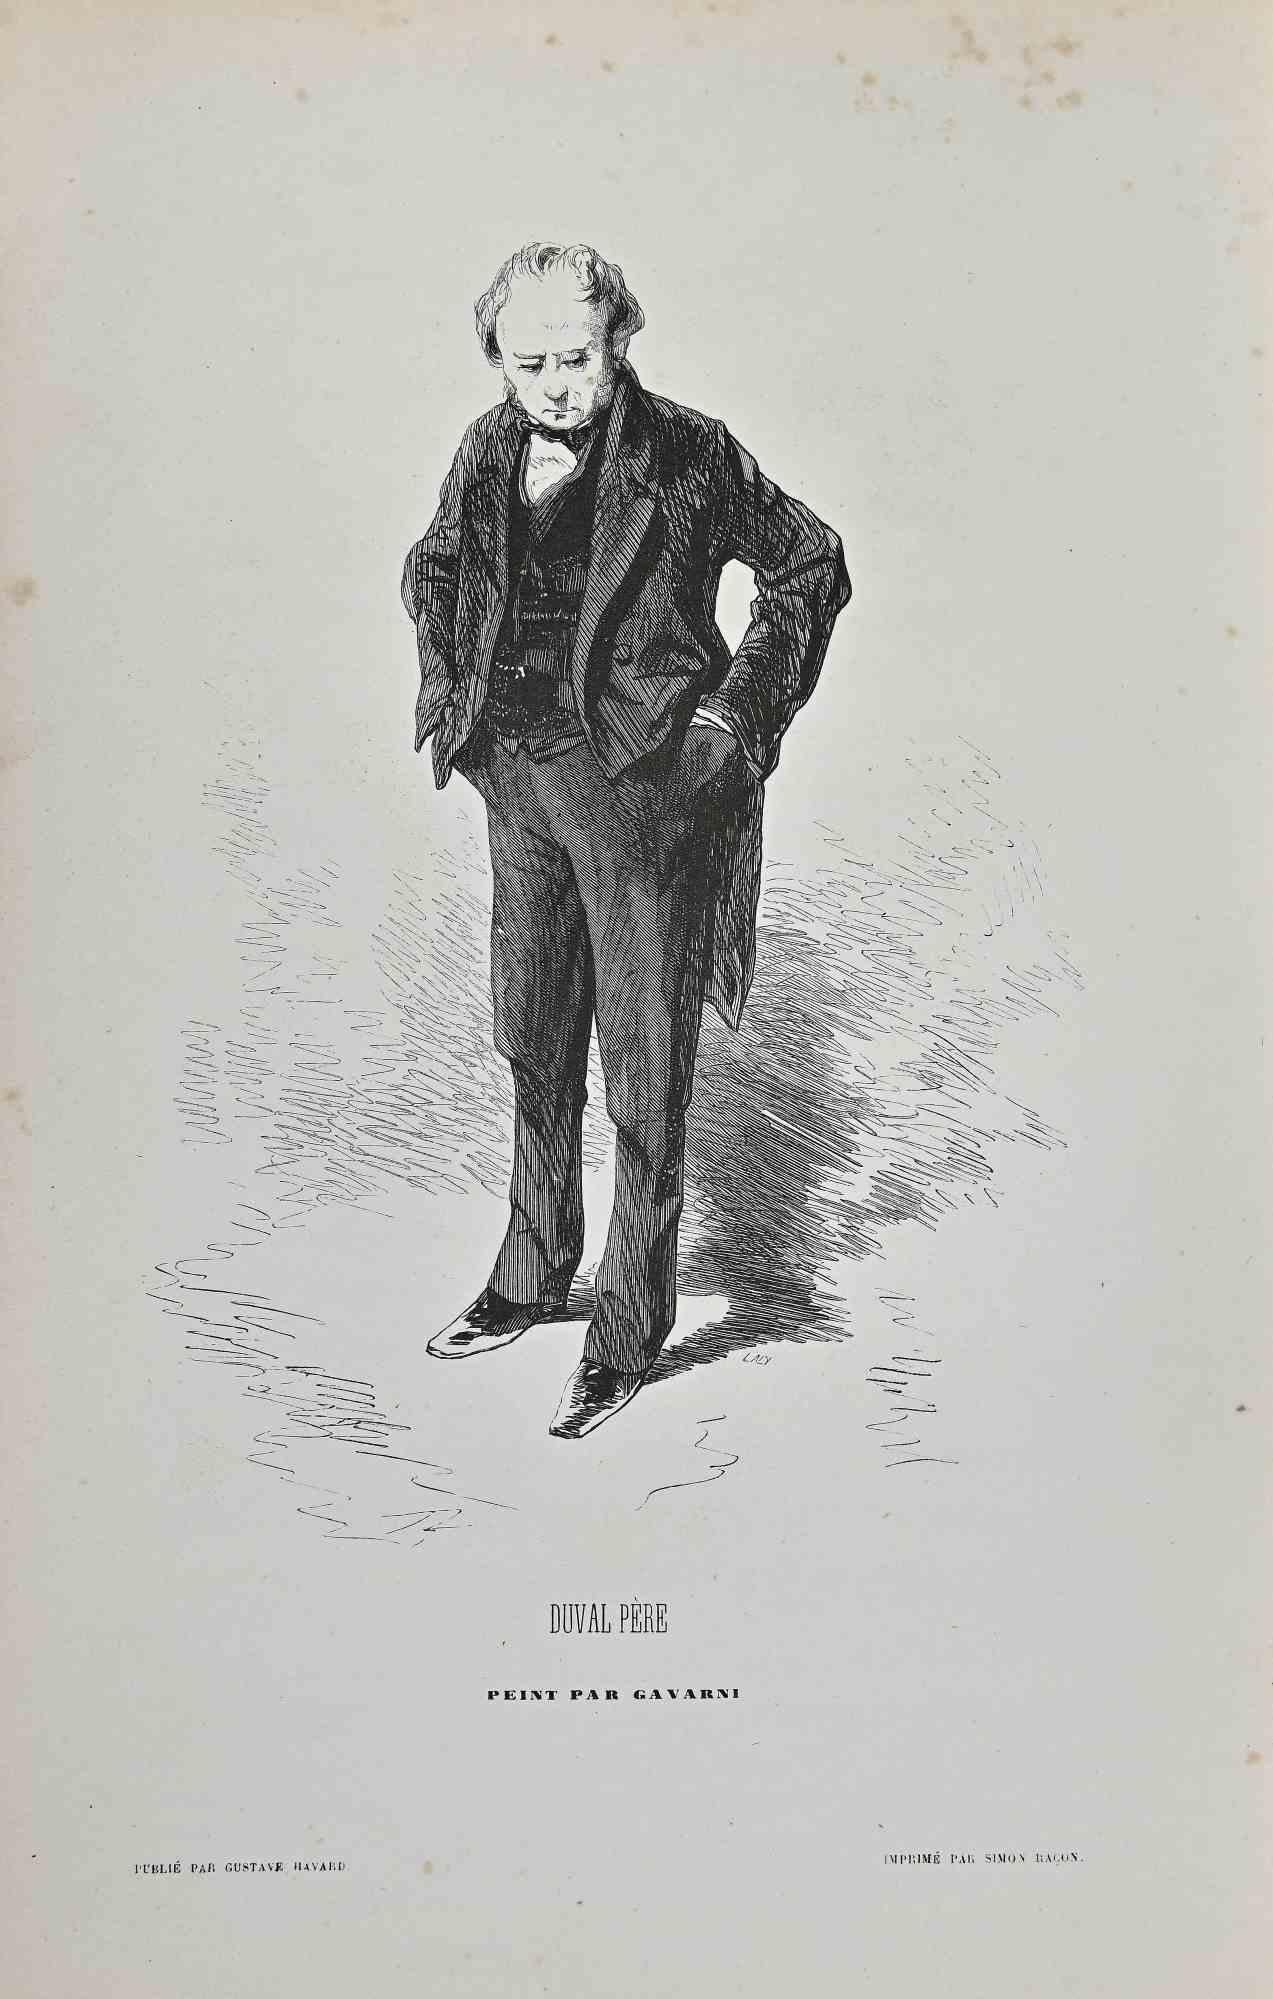 Duval Pere - Litografía de Paul Gavarni - mediados del siglo XIX